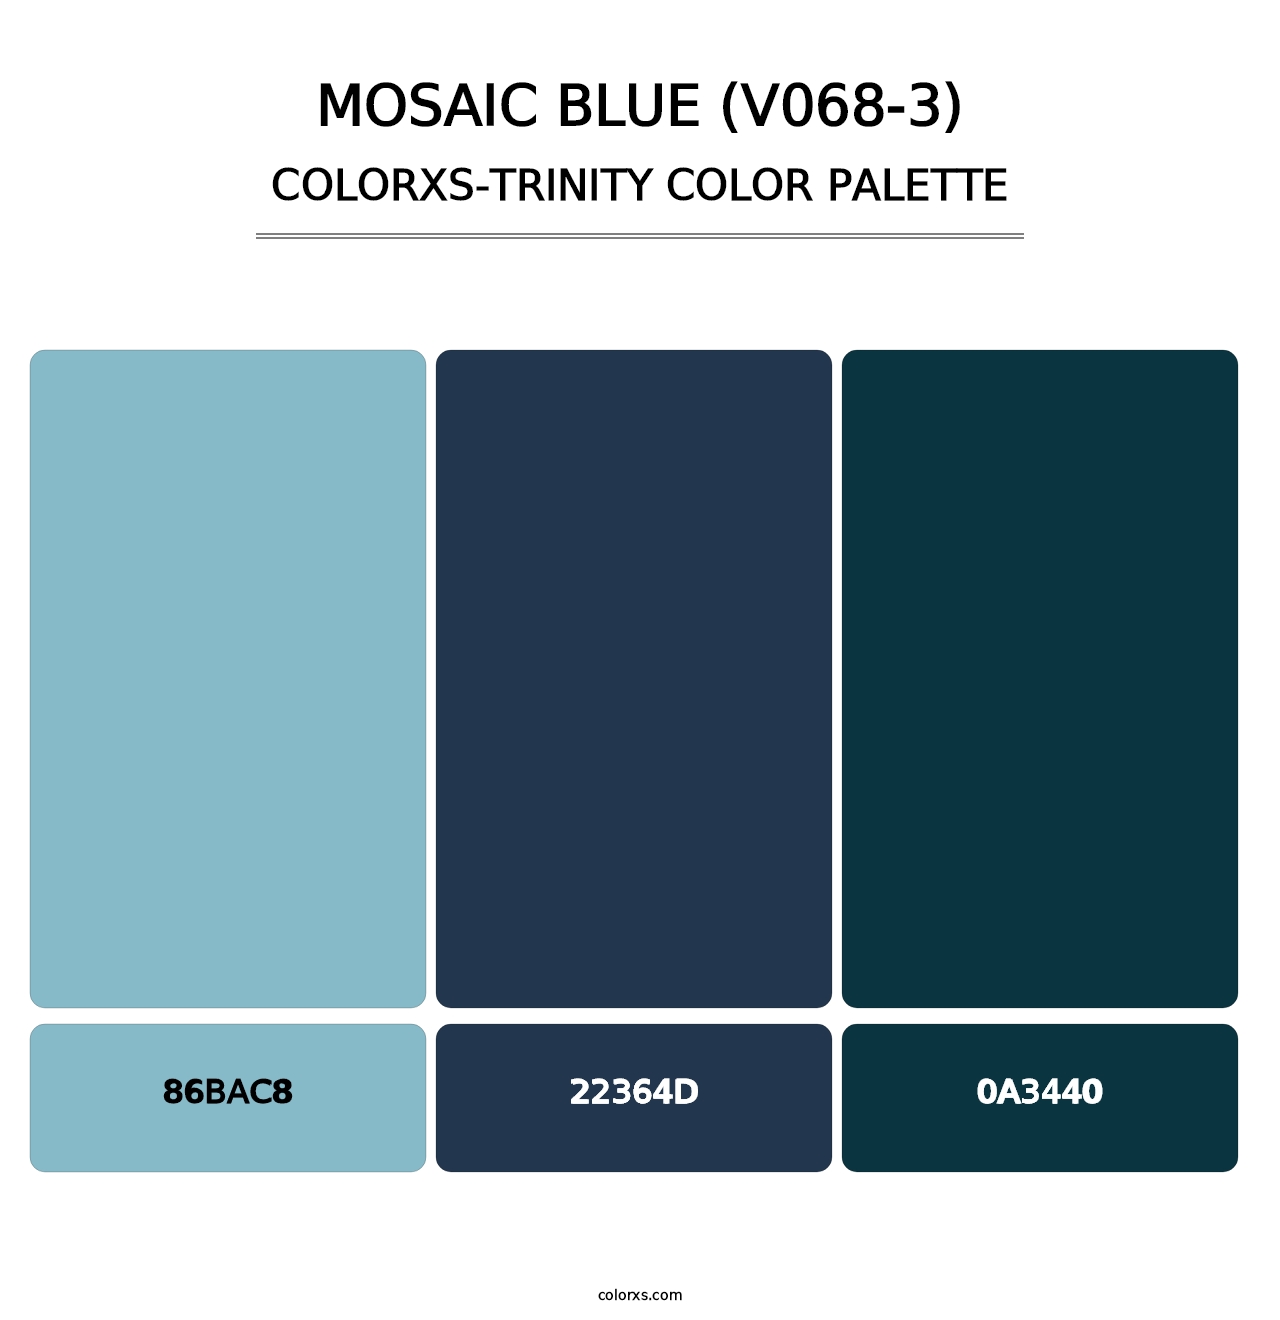 Mosaic Blue (V068-3) - Colorxs Trinity Palette